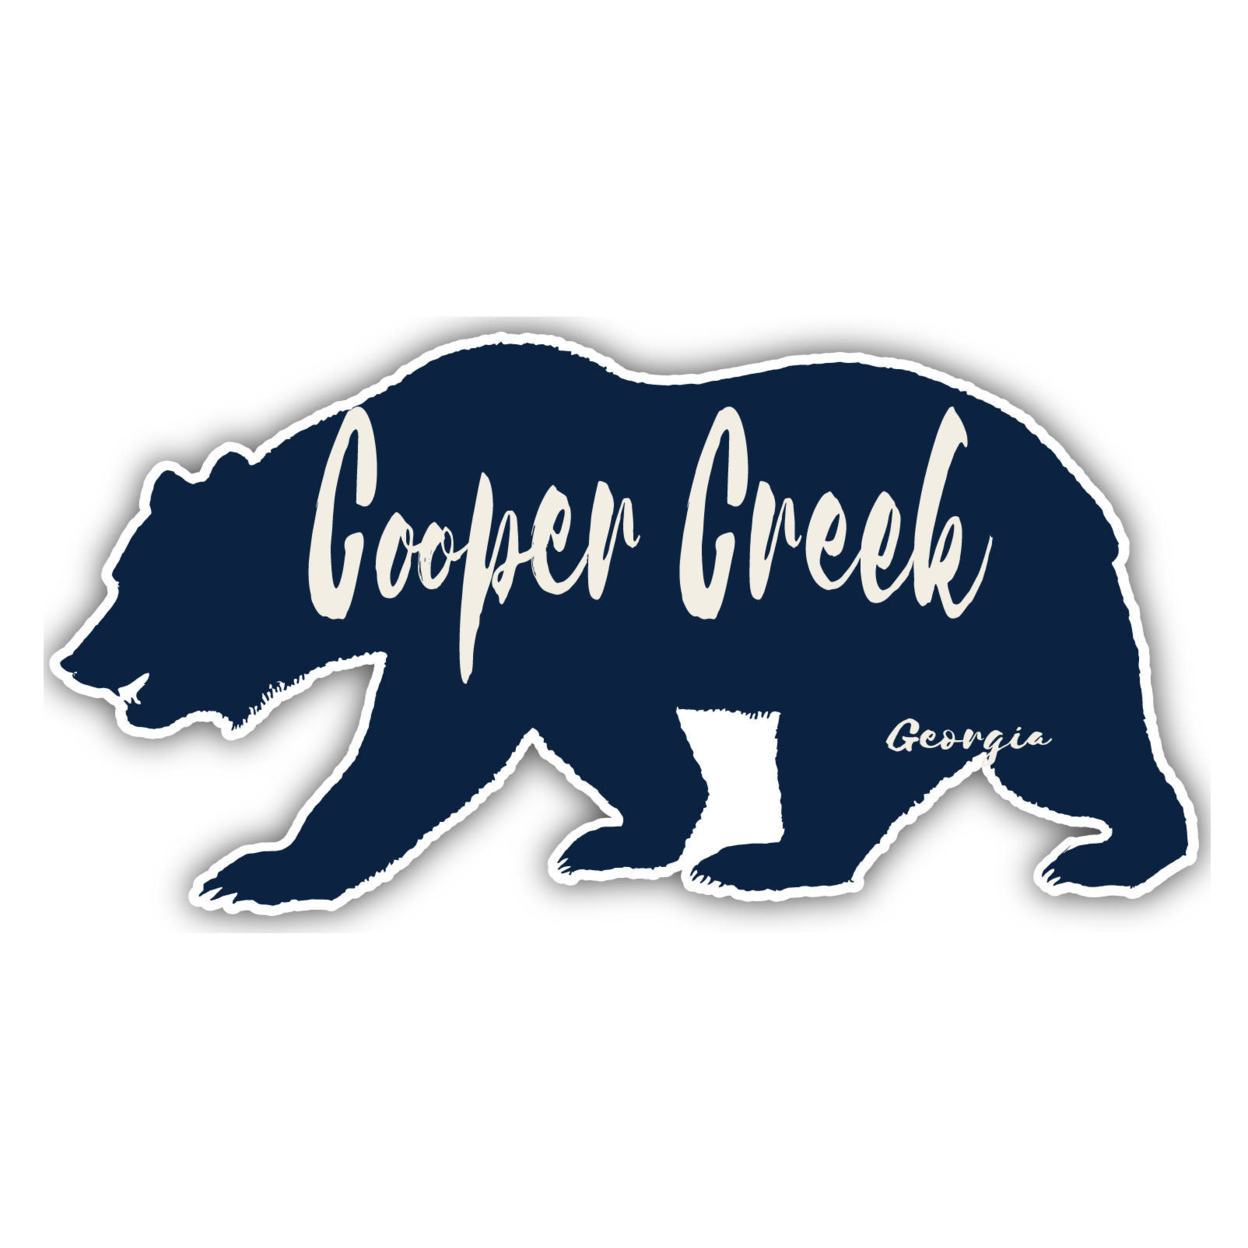 Cooper Creek Georgia Souvenir Decorative Stickers (Choose Theme And Size) - 4-Pack, 4-Inch, Bear